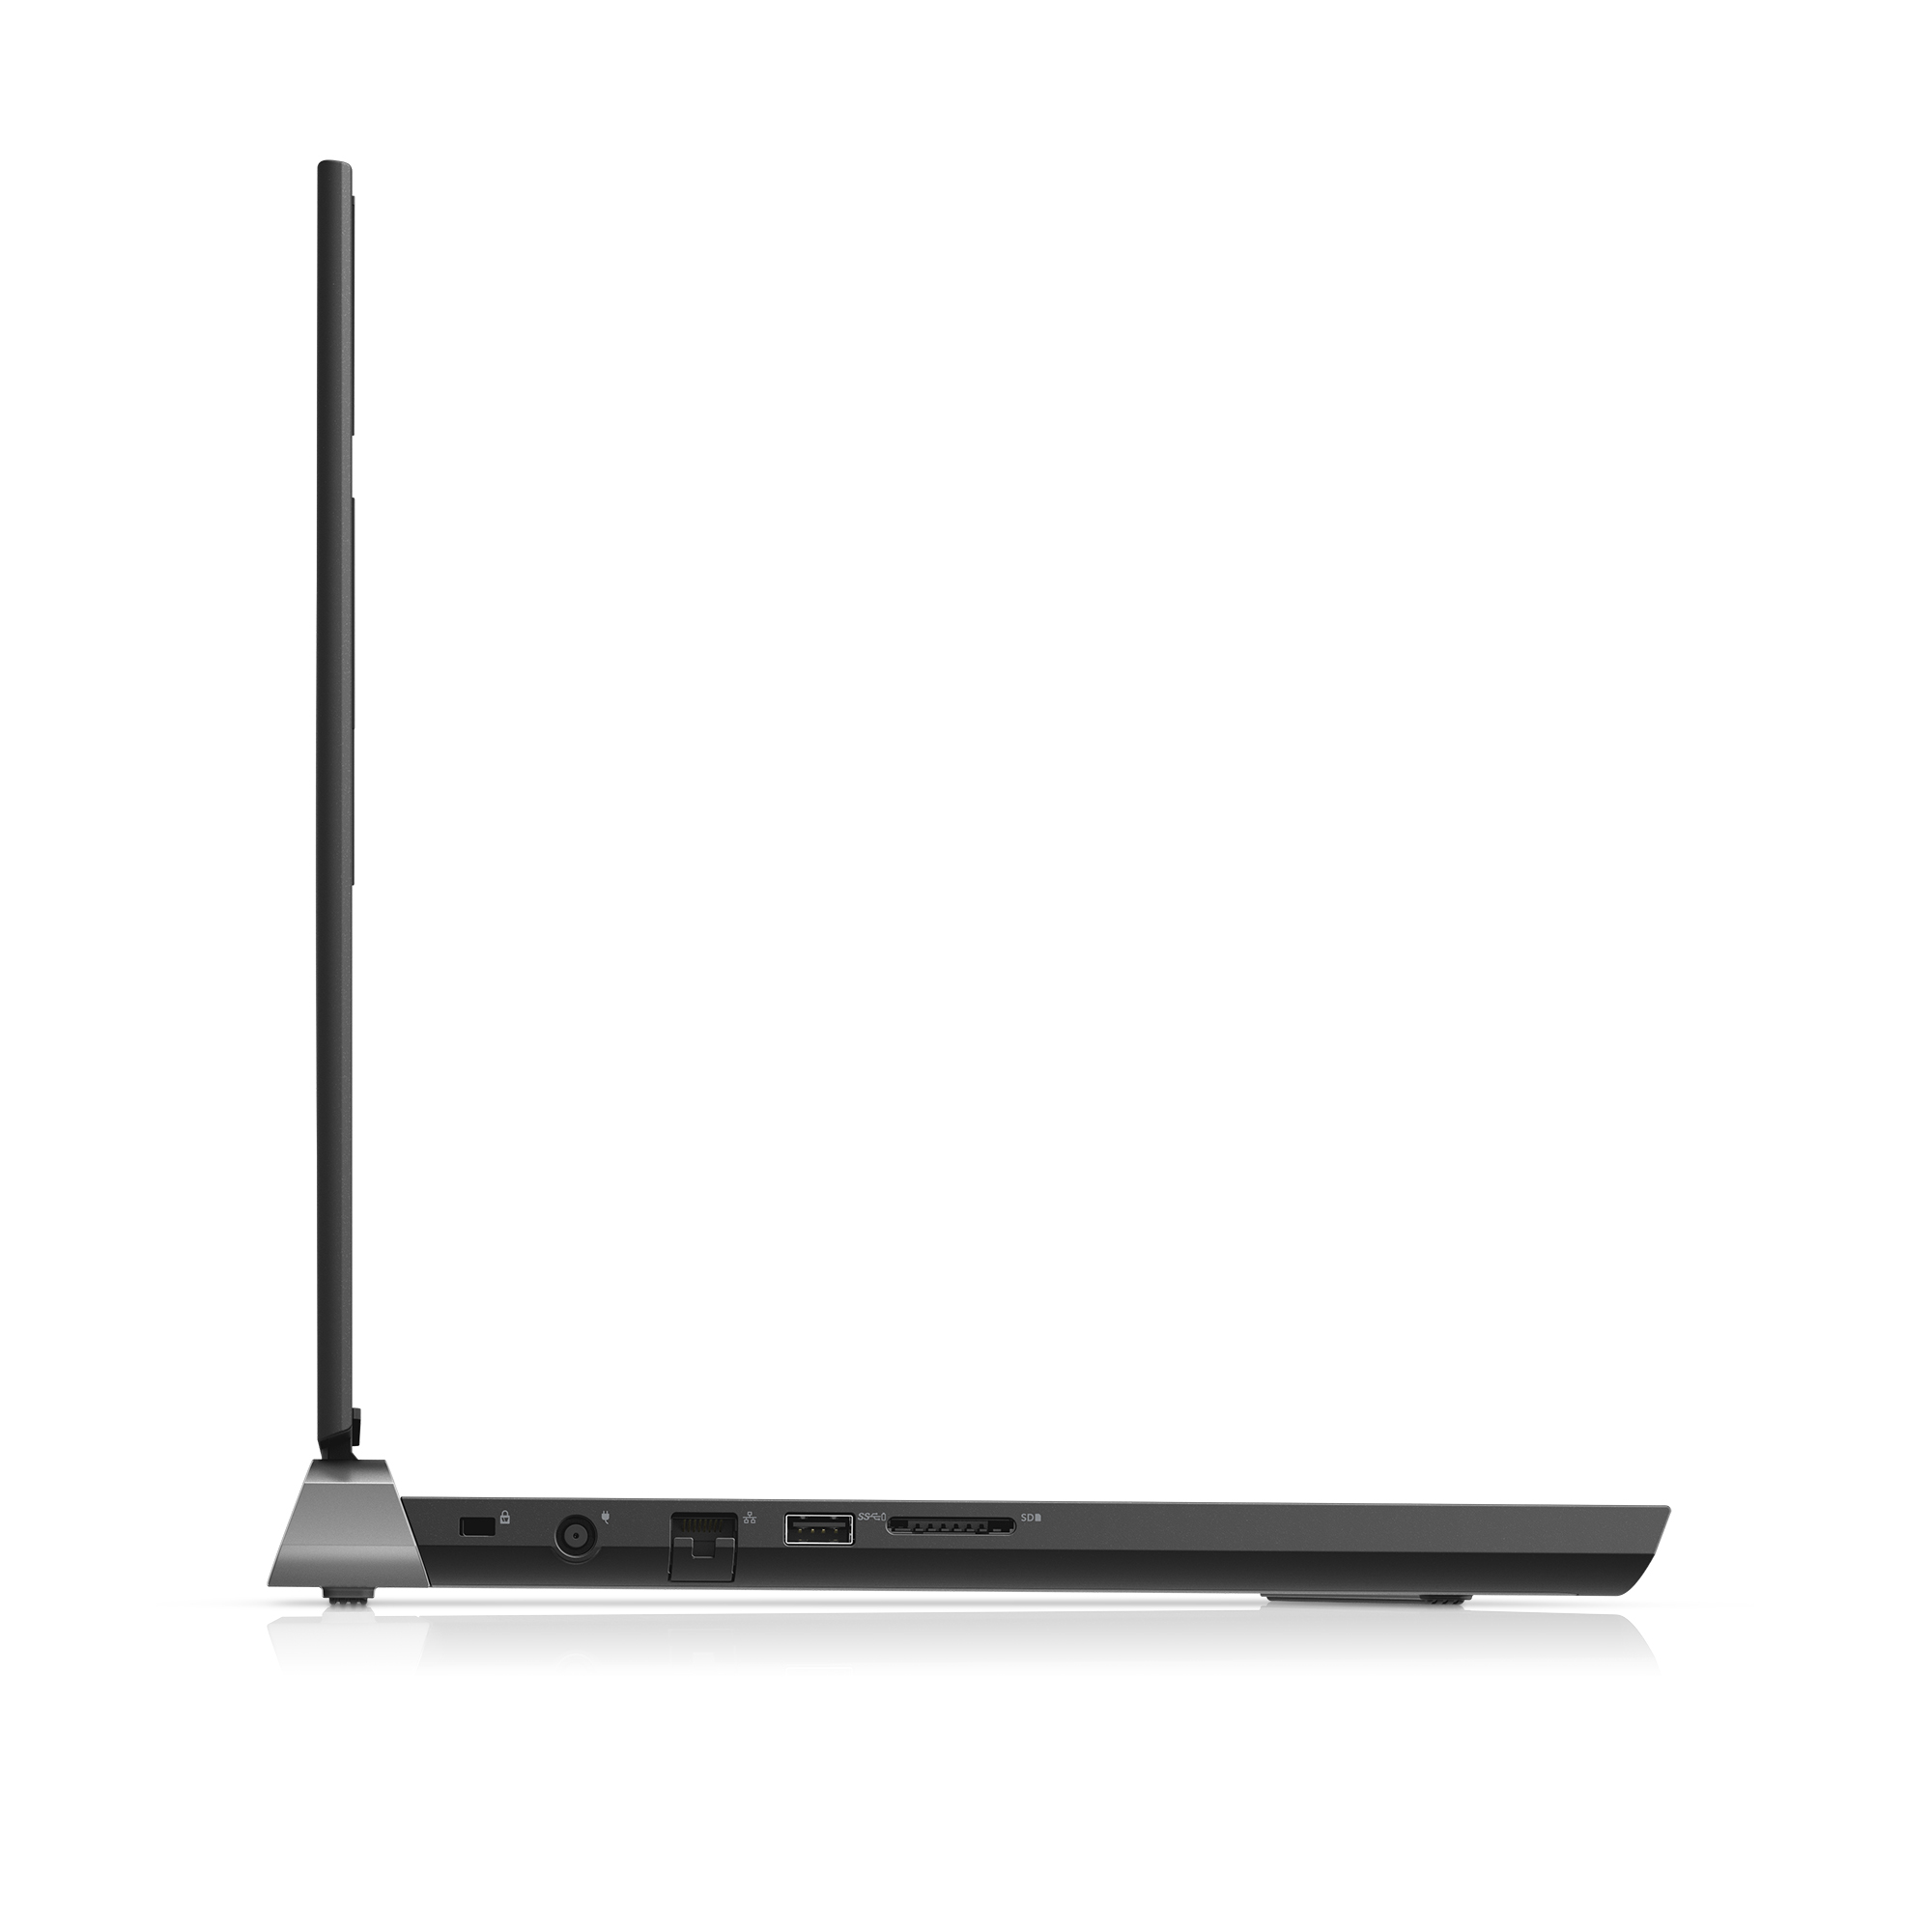 Dell G5 Gaming Laptop 15.6" Full HD, Intel Core i7-8750H, NVIDIA GeForce GTX 1050 Ti 4GB, 1TB HDD + 128GB SSD Storage, 16GB RAM, G5587-7835BLK-PUS - image 3 of 9